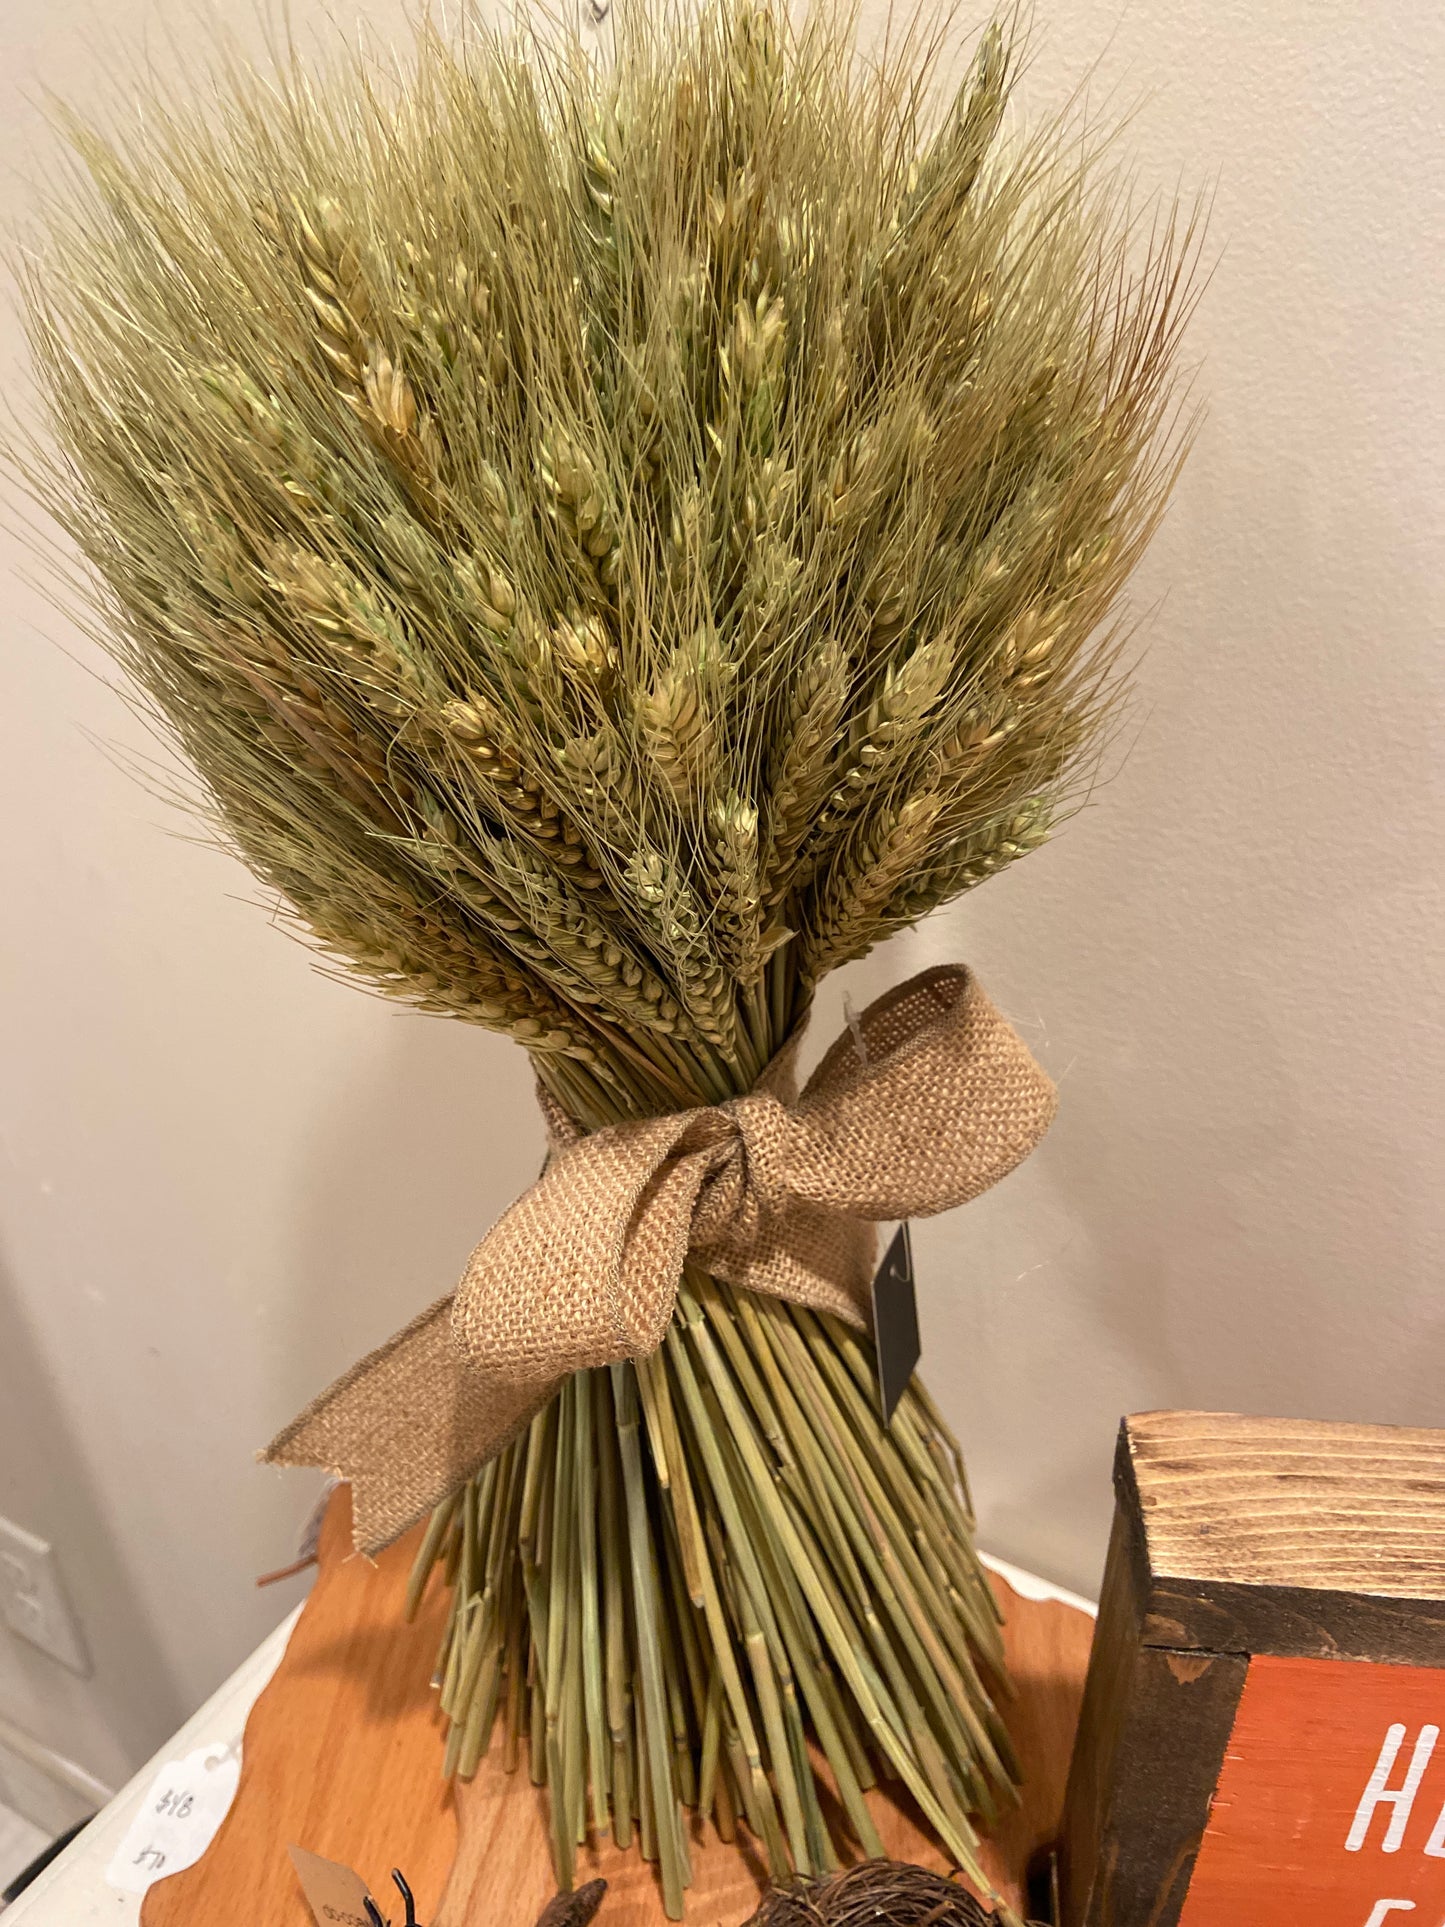 Wheat stem